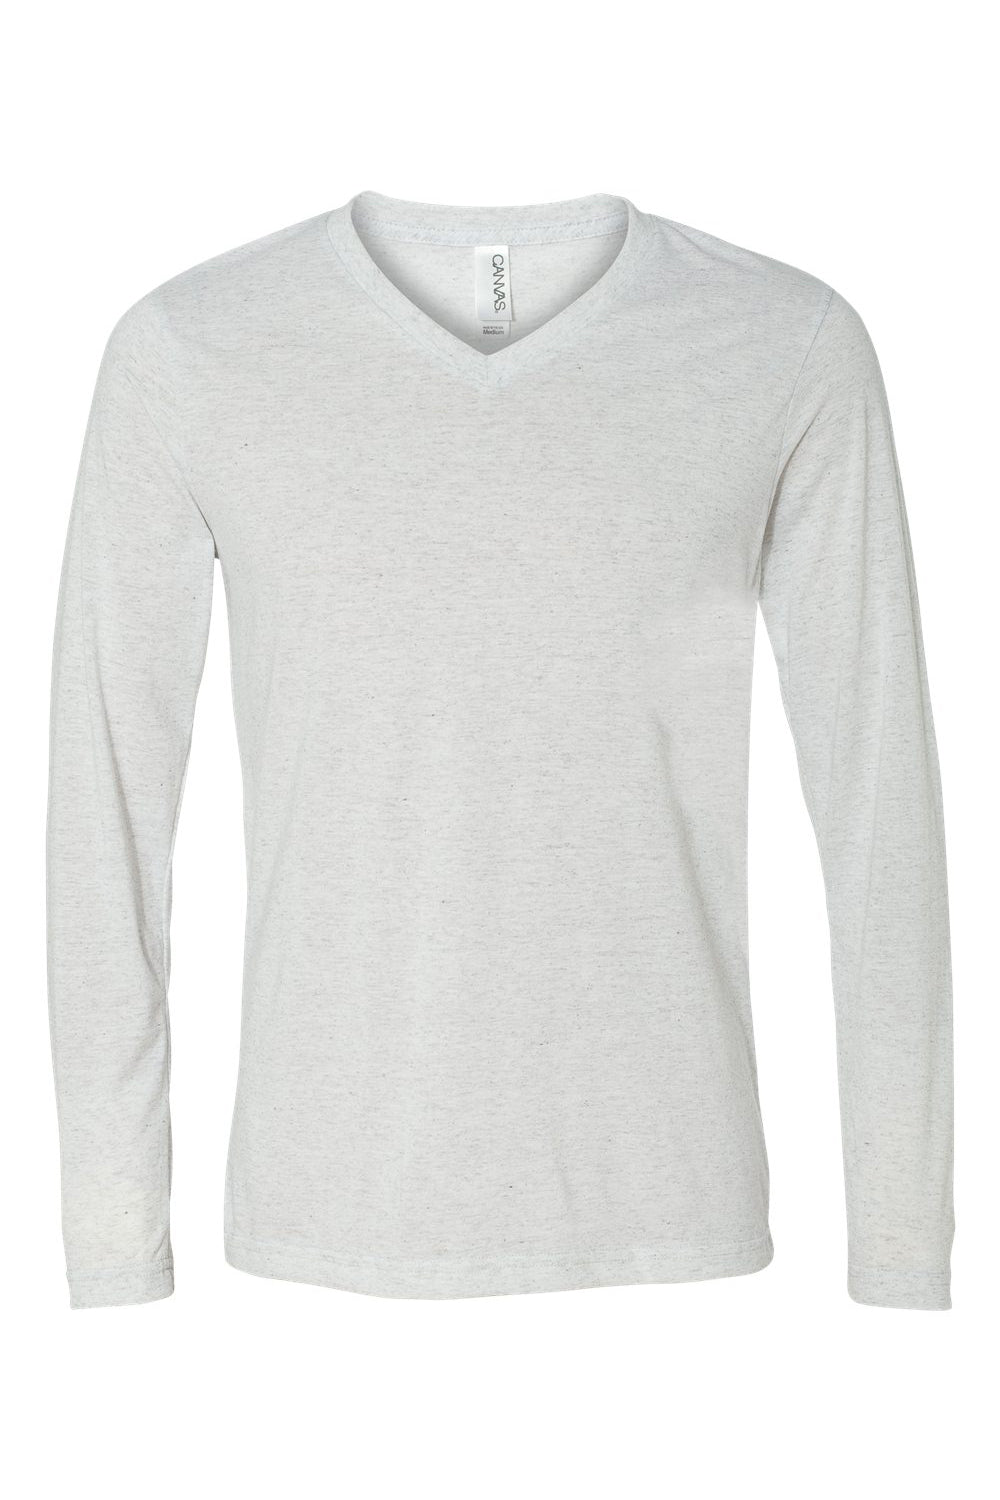 Bella + Canvas 3425 Mens Jersey Long Sleeve V-Neck T-Shirt White Fleck Flat Front